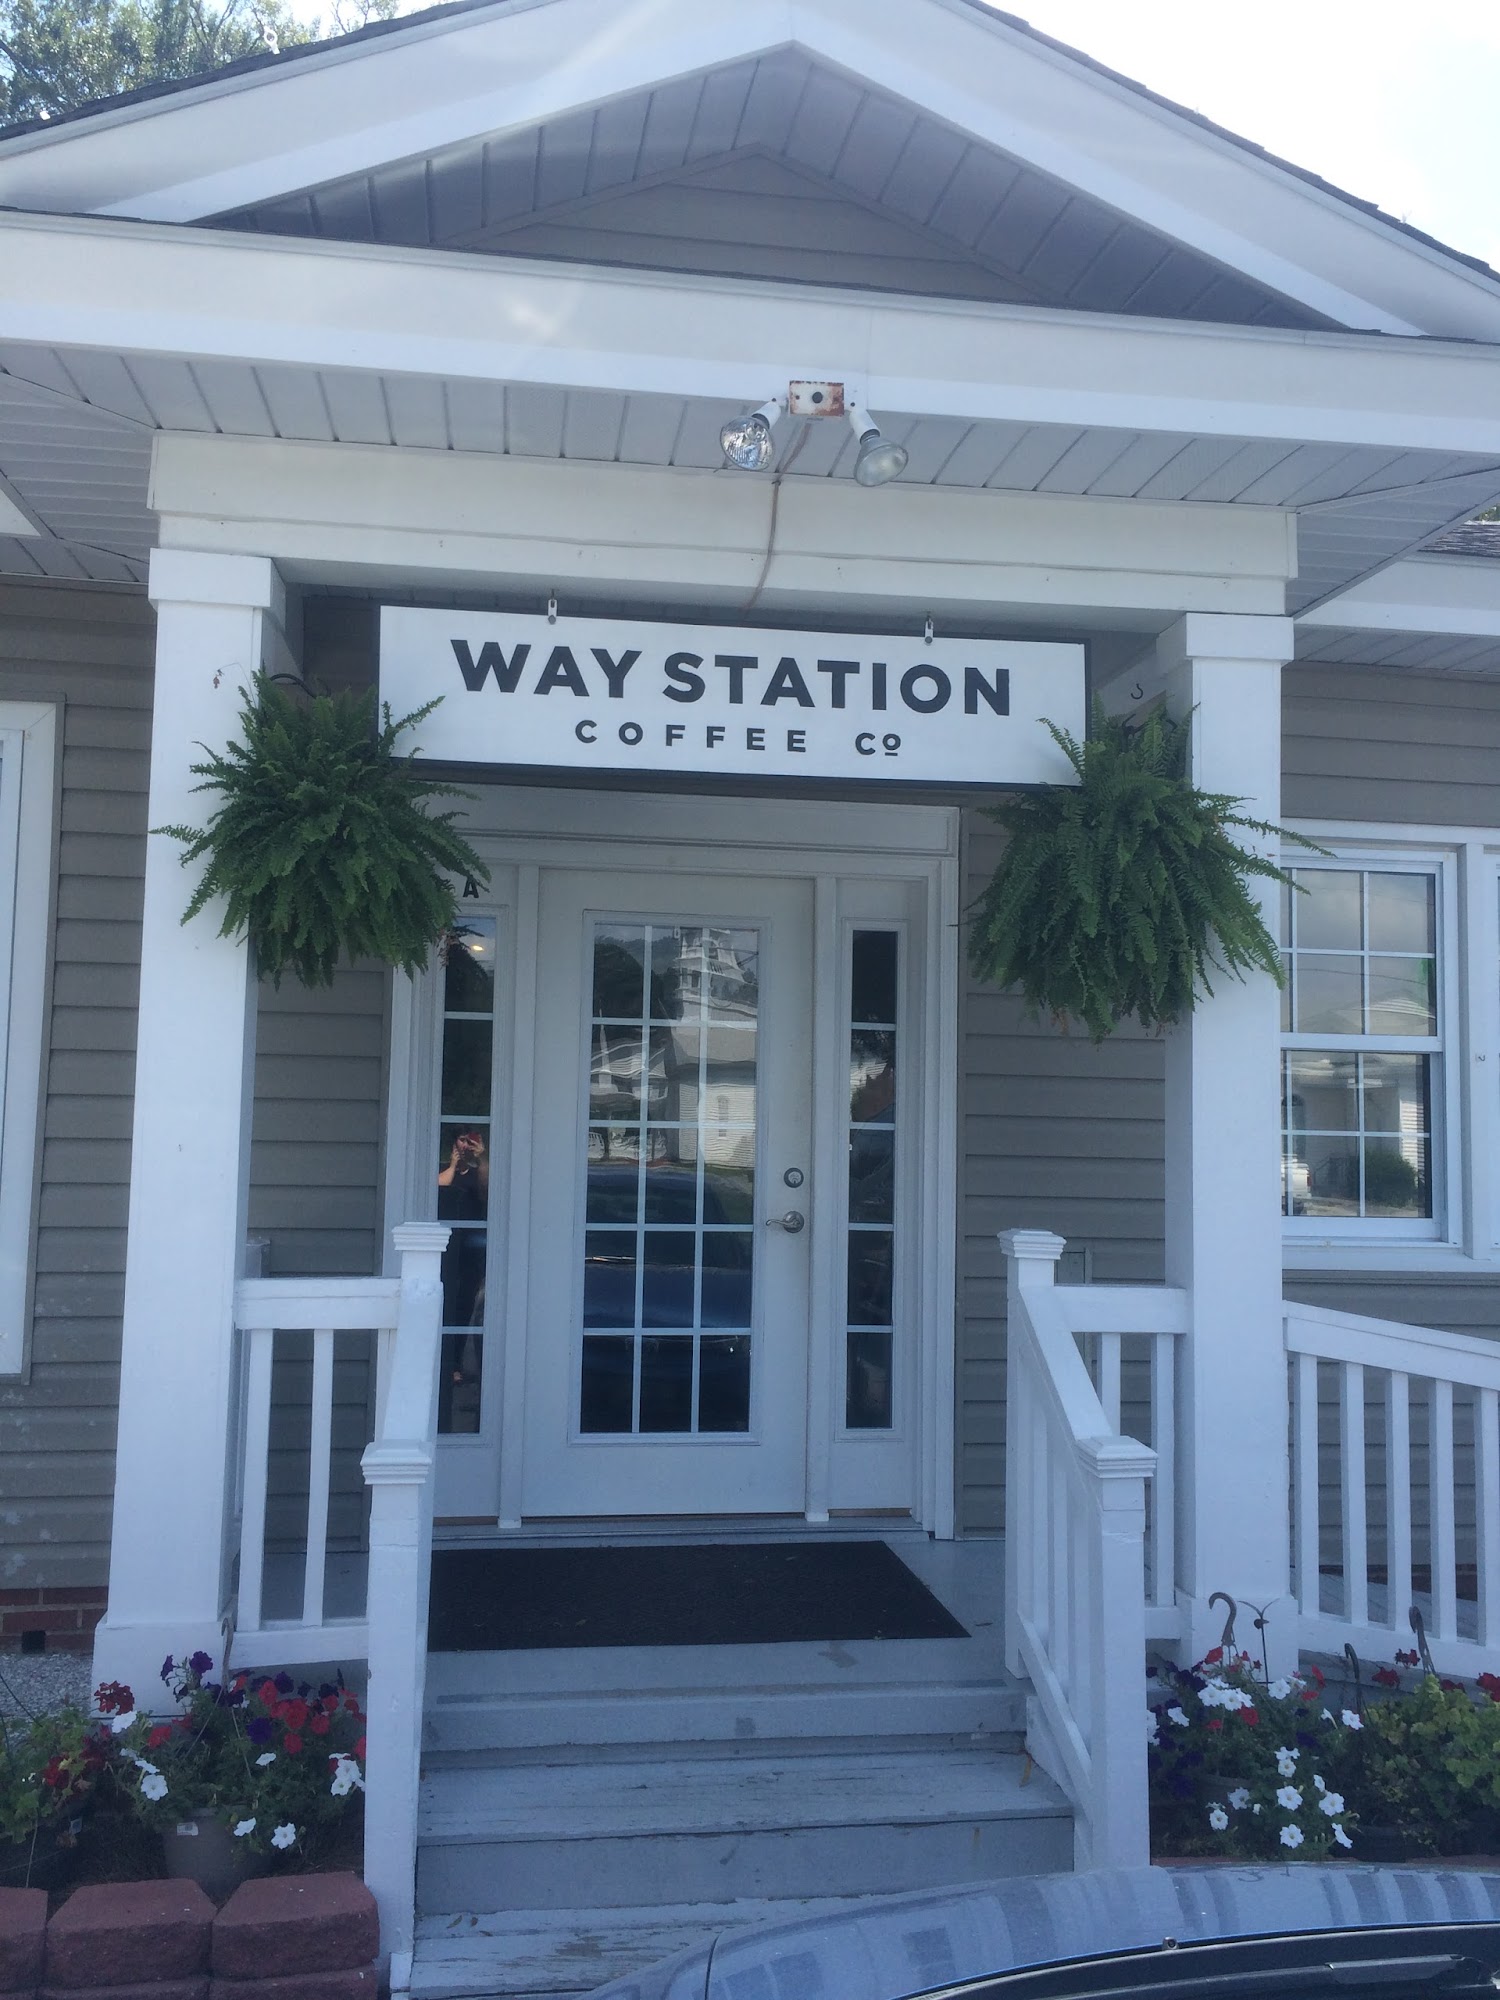 Way Station Coffee Co.